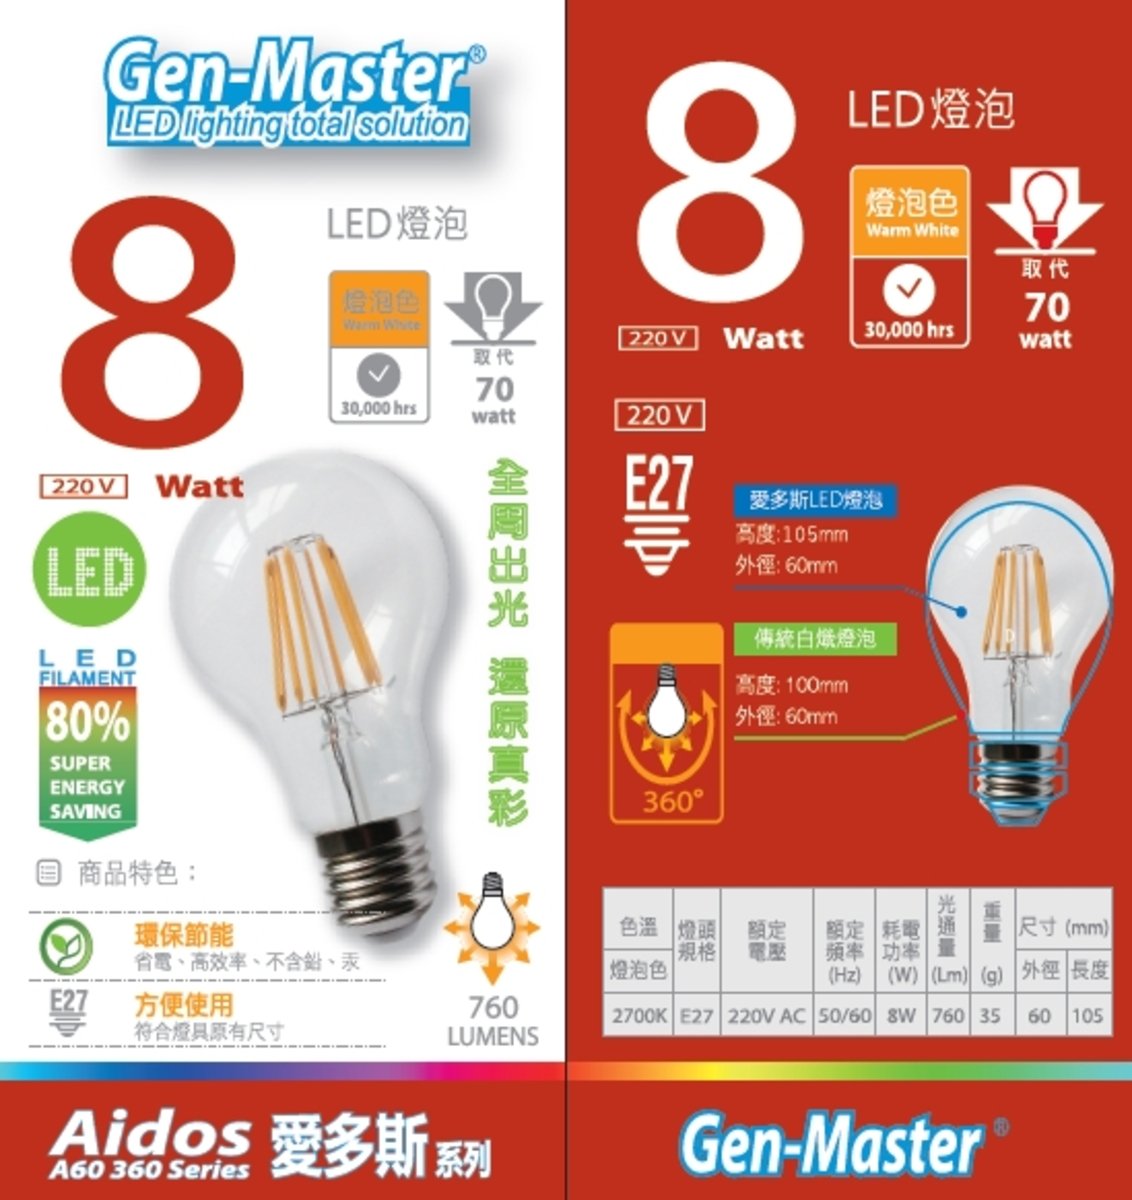 AIDOS LED Bulb 8W Warm White 2700K E27 Dimmerable